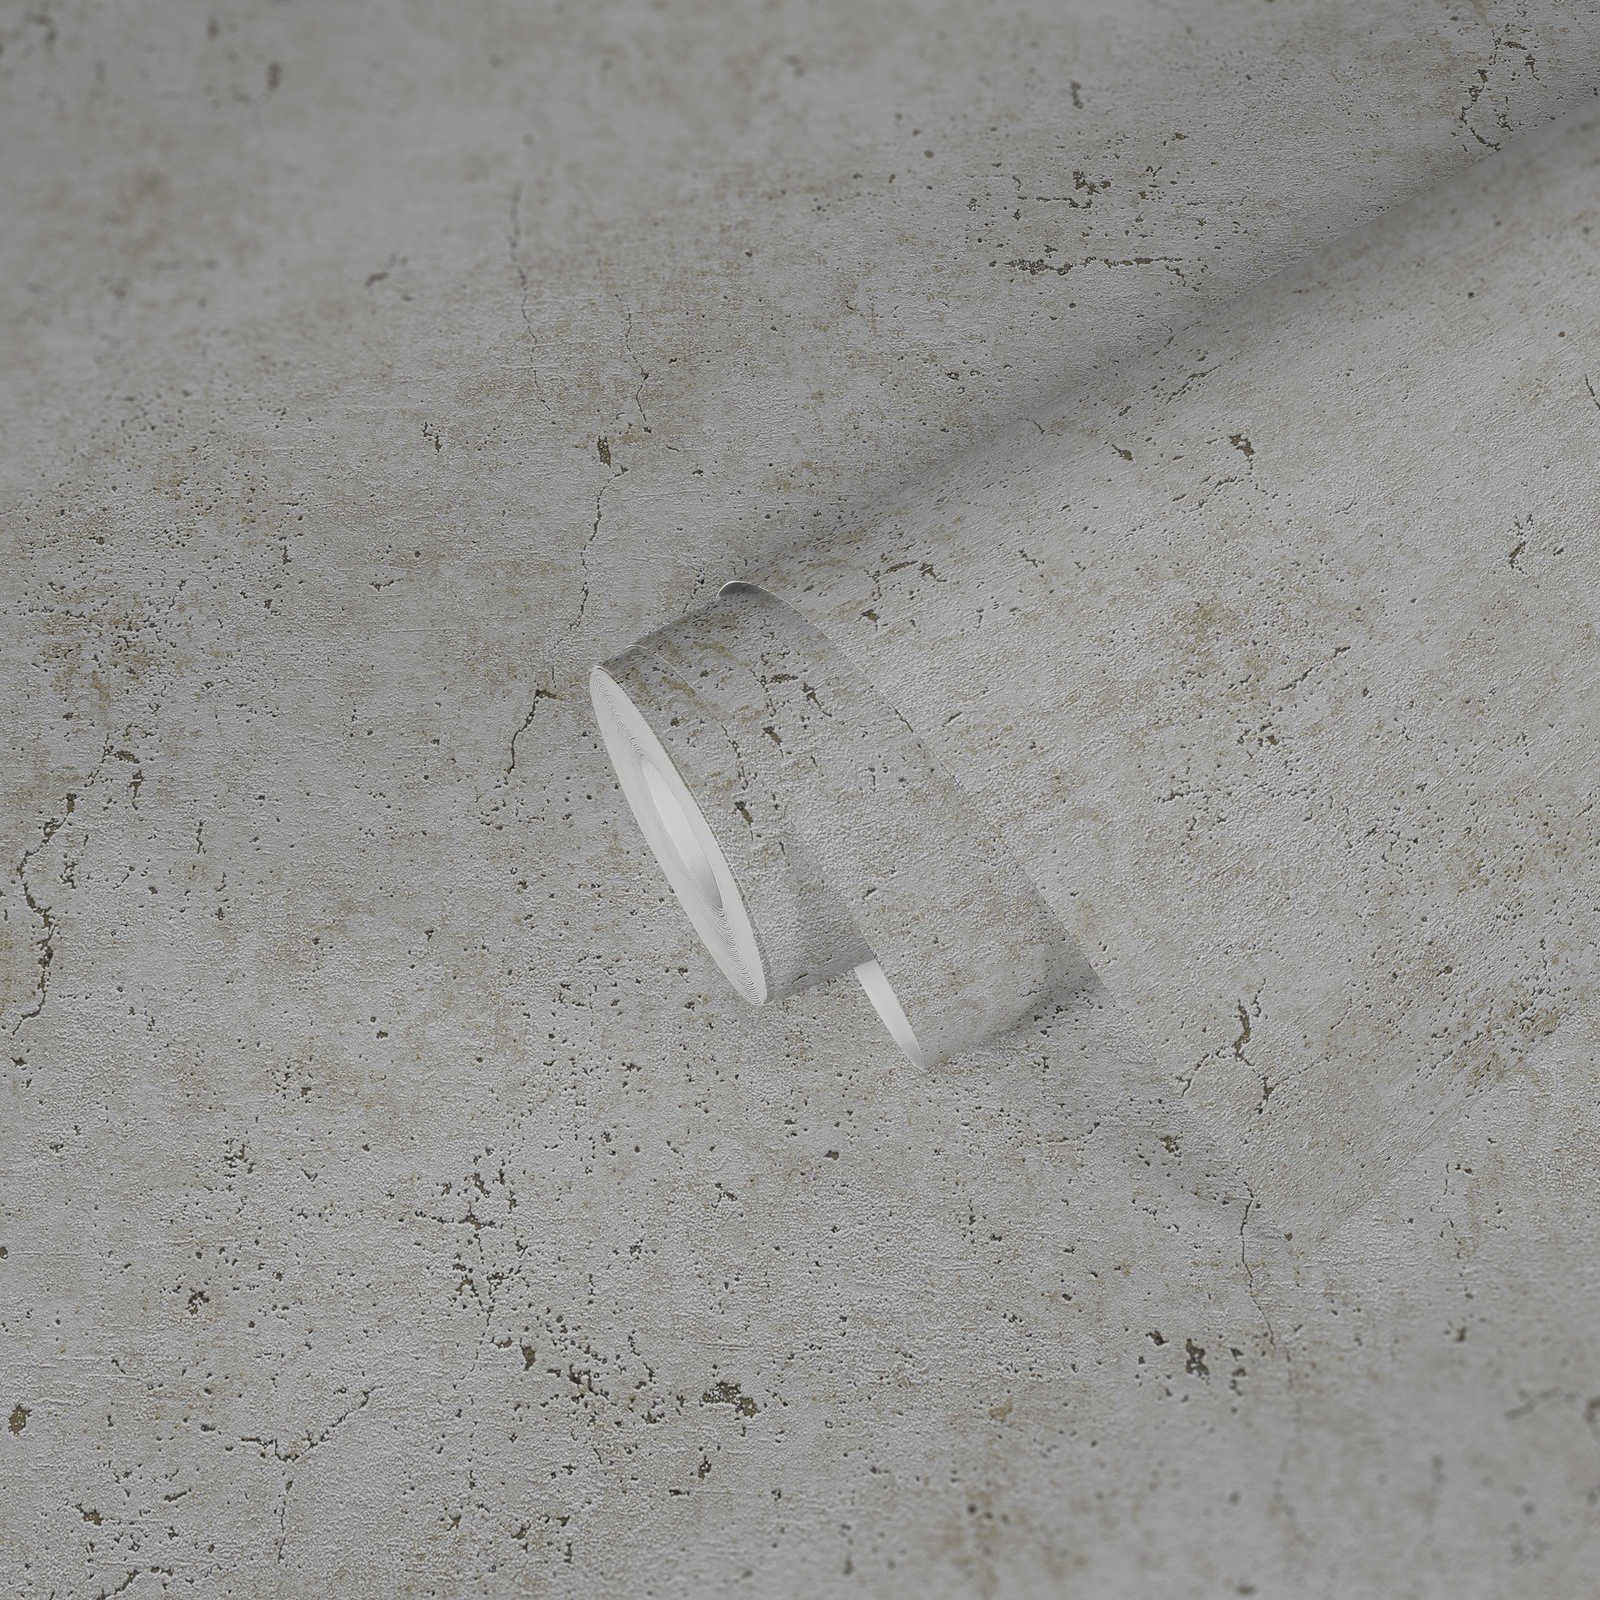             Wallpaper with concrete look, optical cracks & pores - grey
        